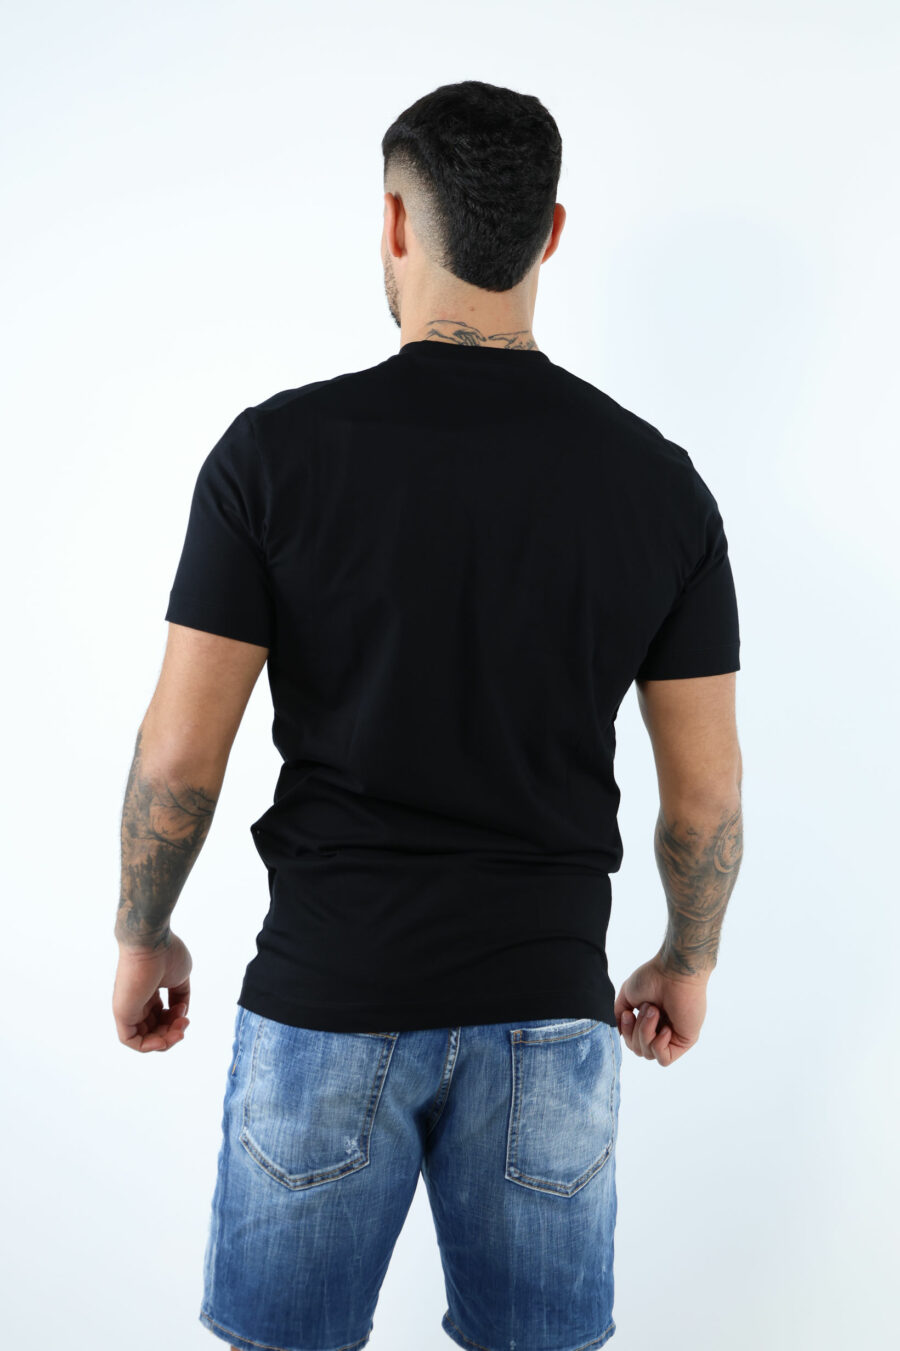 Camiseta negra con minilogo "ceresio 9, milano" - 106879